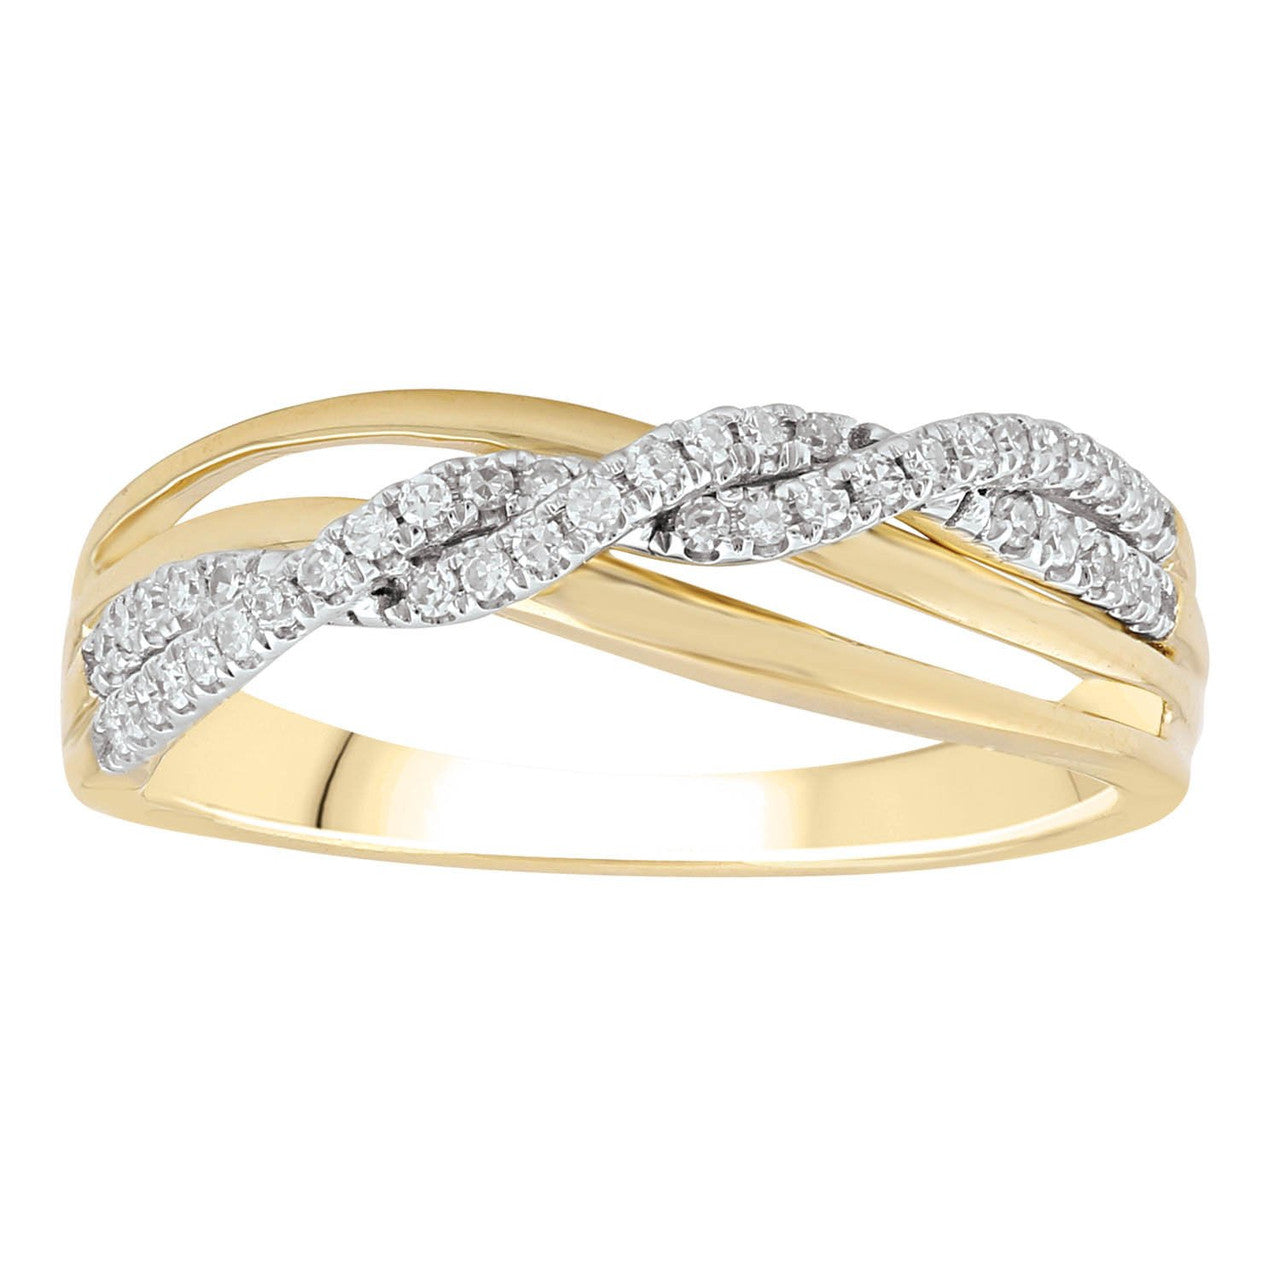 Ice Jewellery Twist Ring with 0.15ct Diamonds in 9K Yellow Gold -  R-40730-015-Y | Ice Jewellery Australia